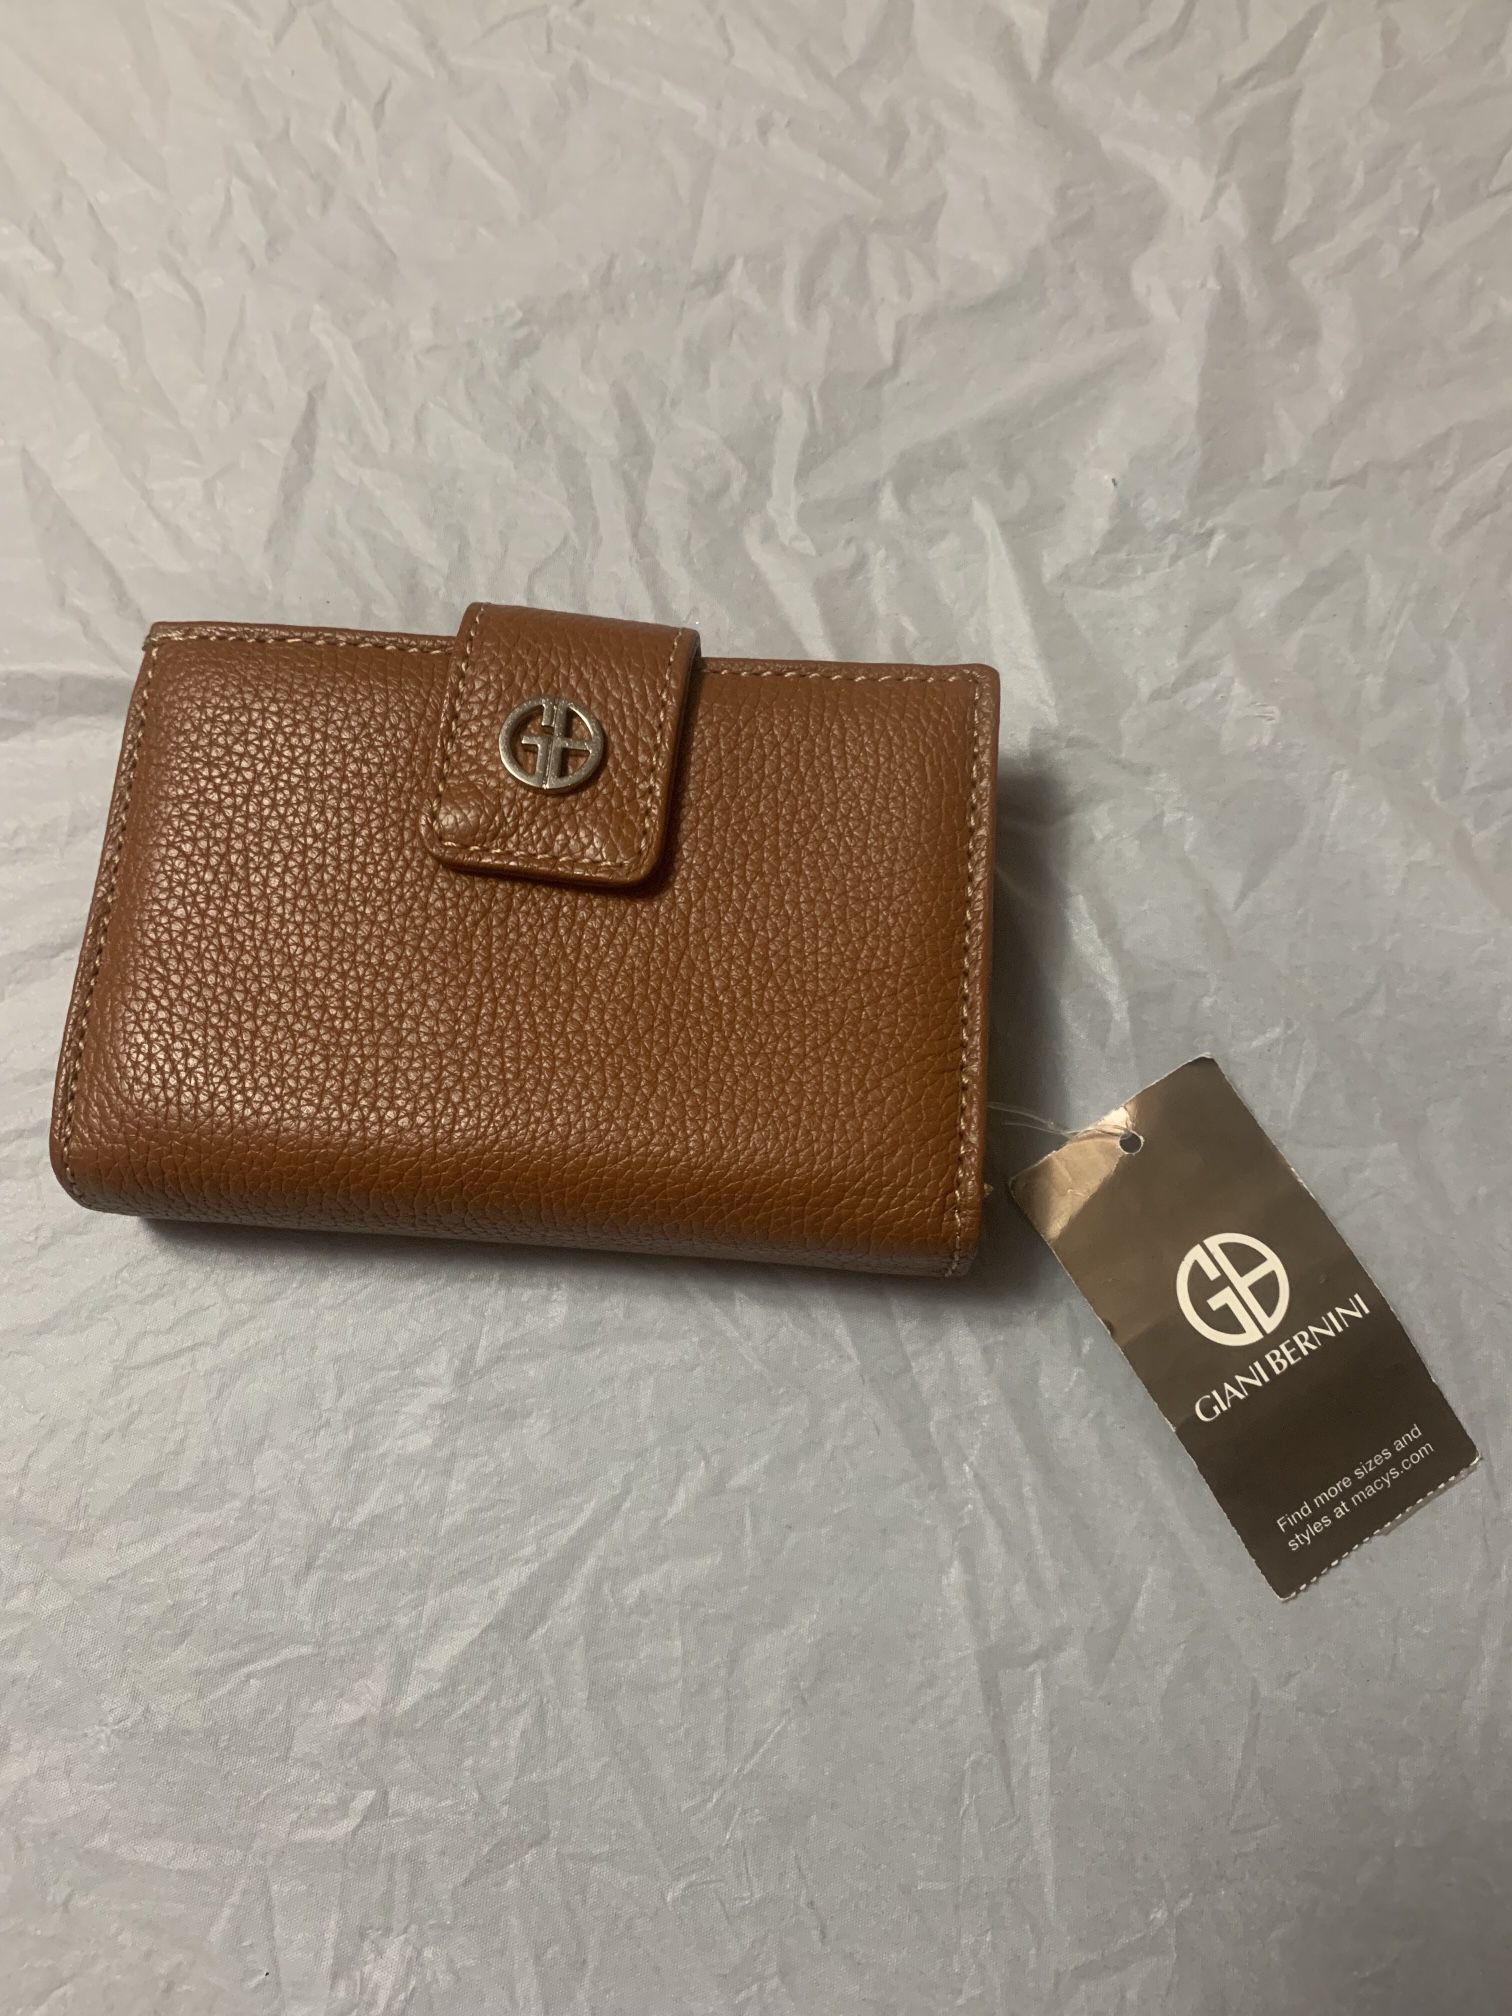 Giani Bernini Softy Core Leather Brown Cognac Mini Flip Wallet New Purse  for Sale in Richmond, VA - OfferUp